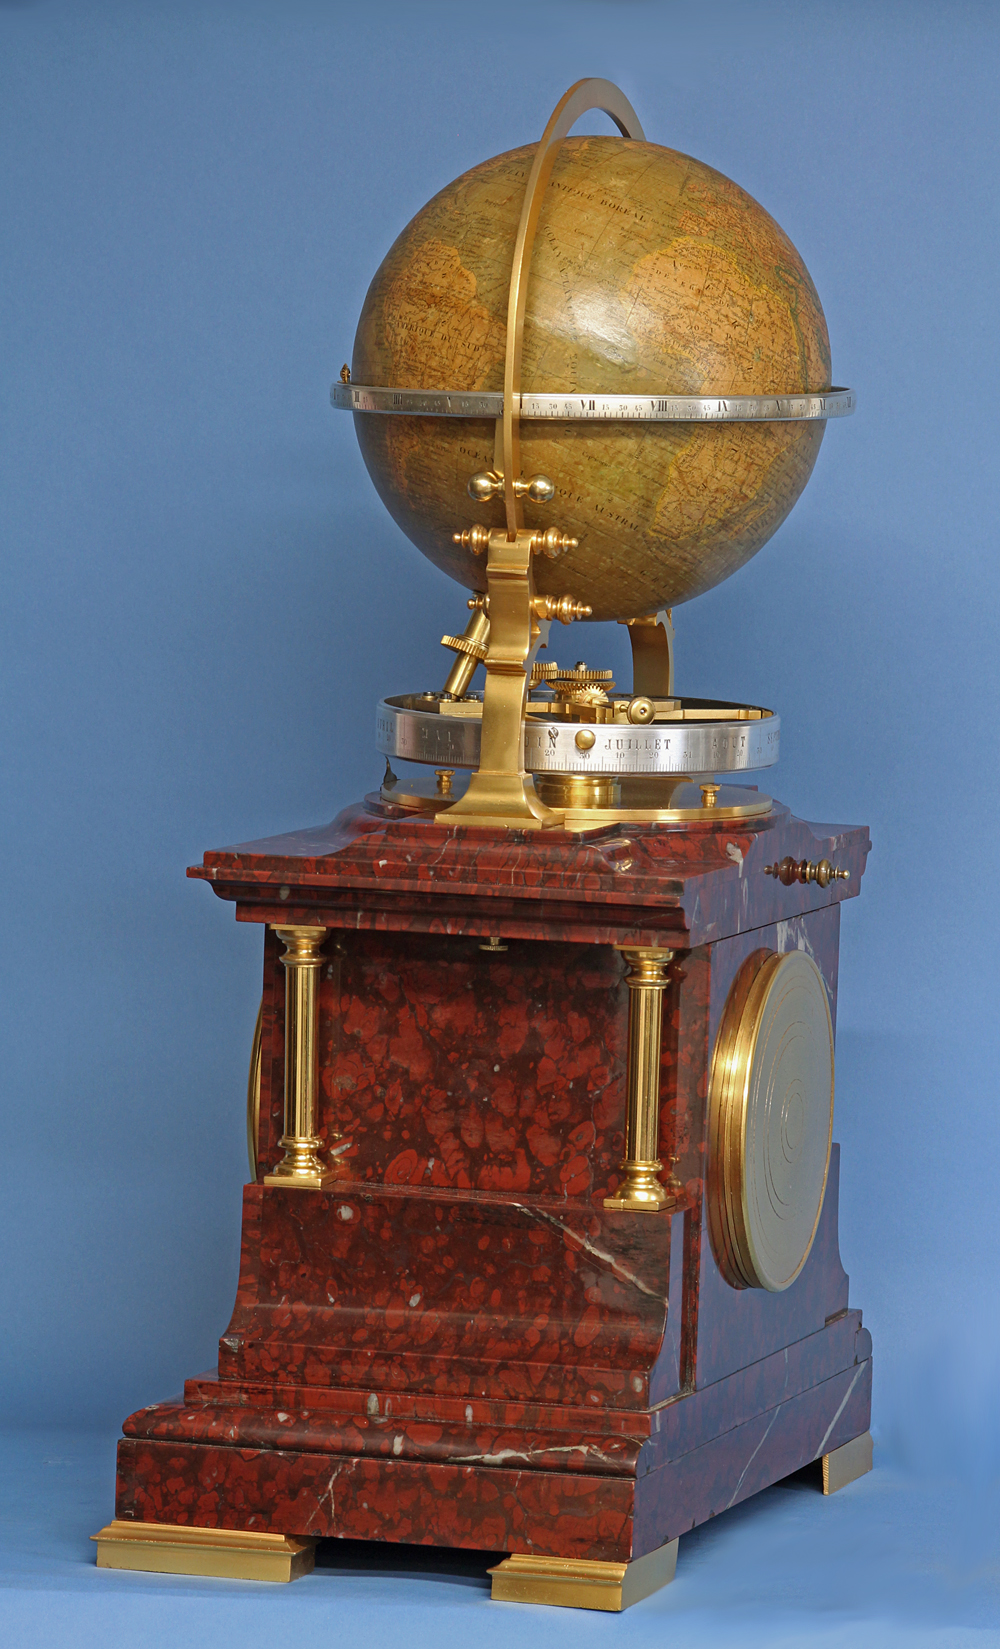 c.1895 French Globe Mantel Clock.